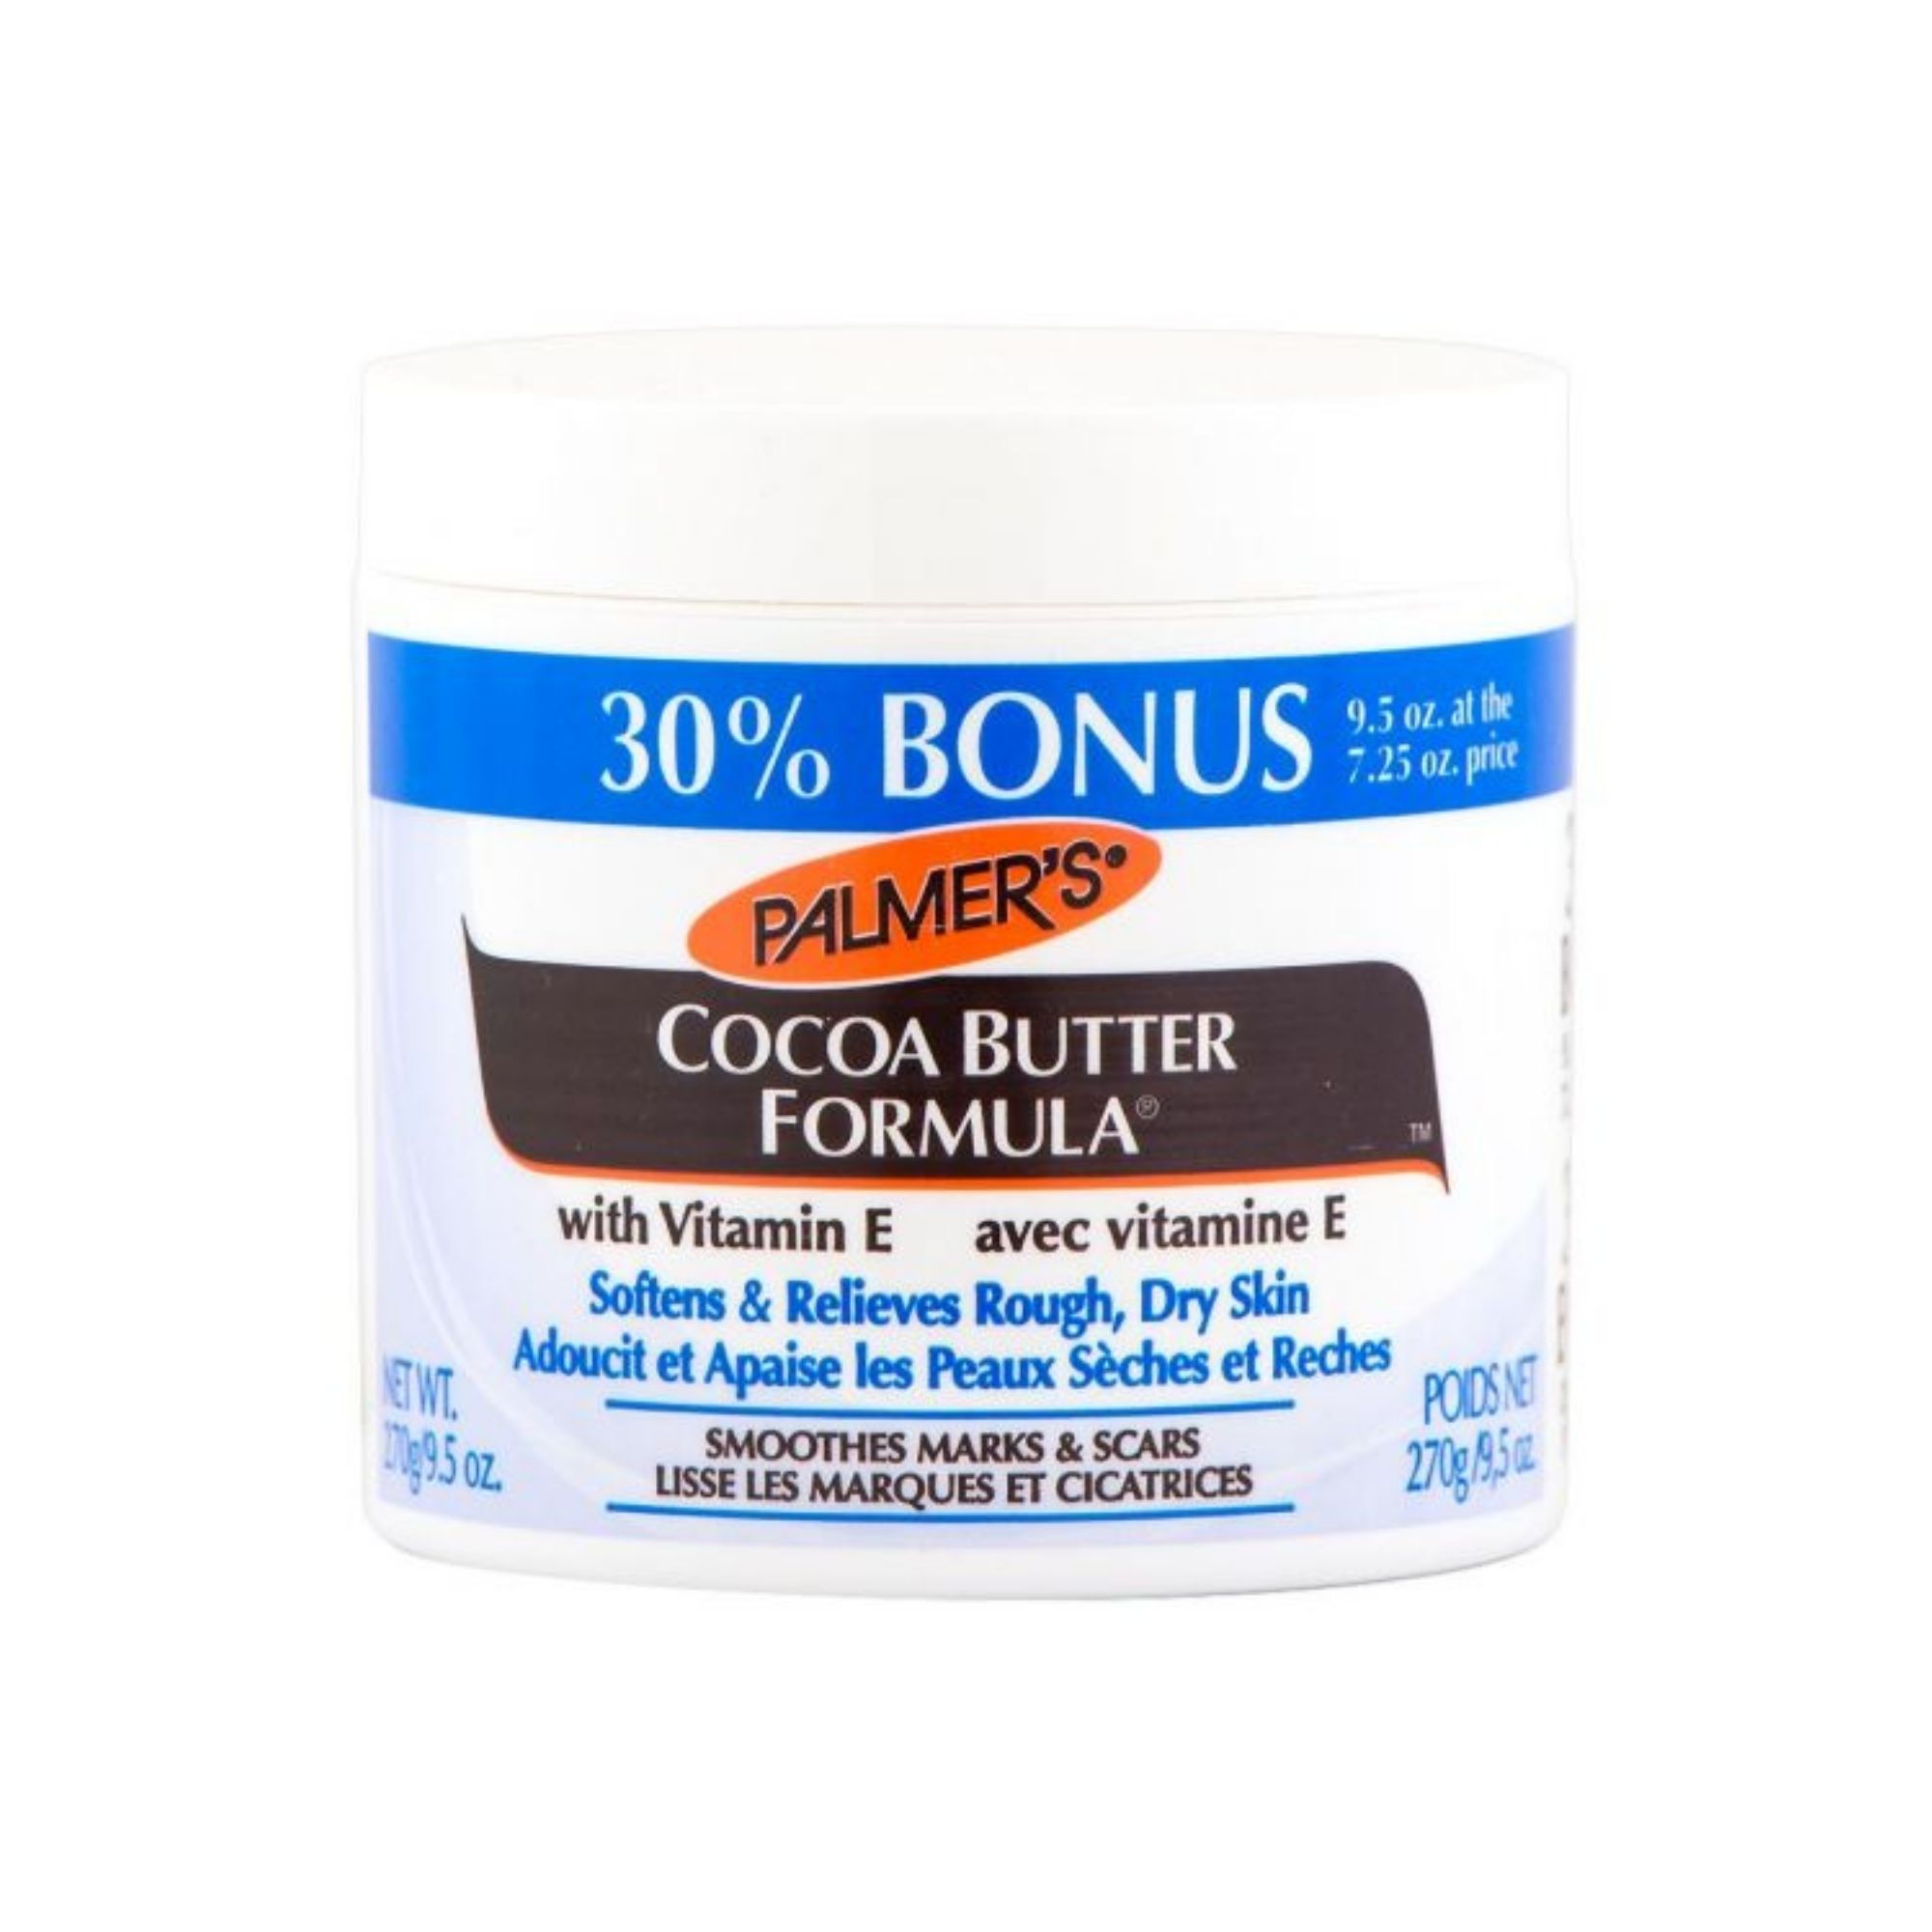 Palmers Cocoa Butter Formula with Vitamin E Bonus Jar